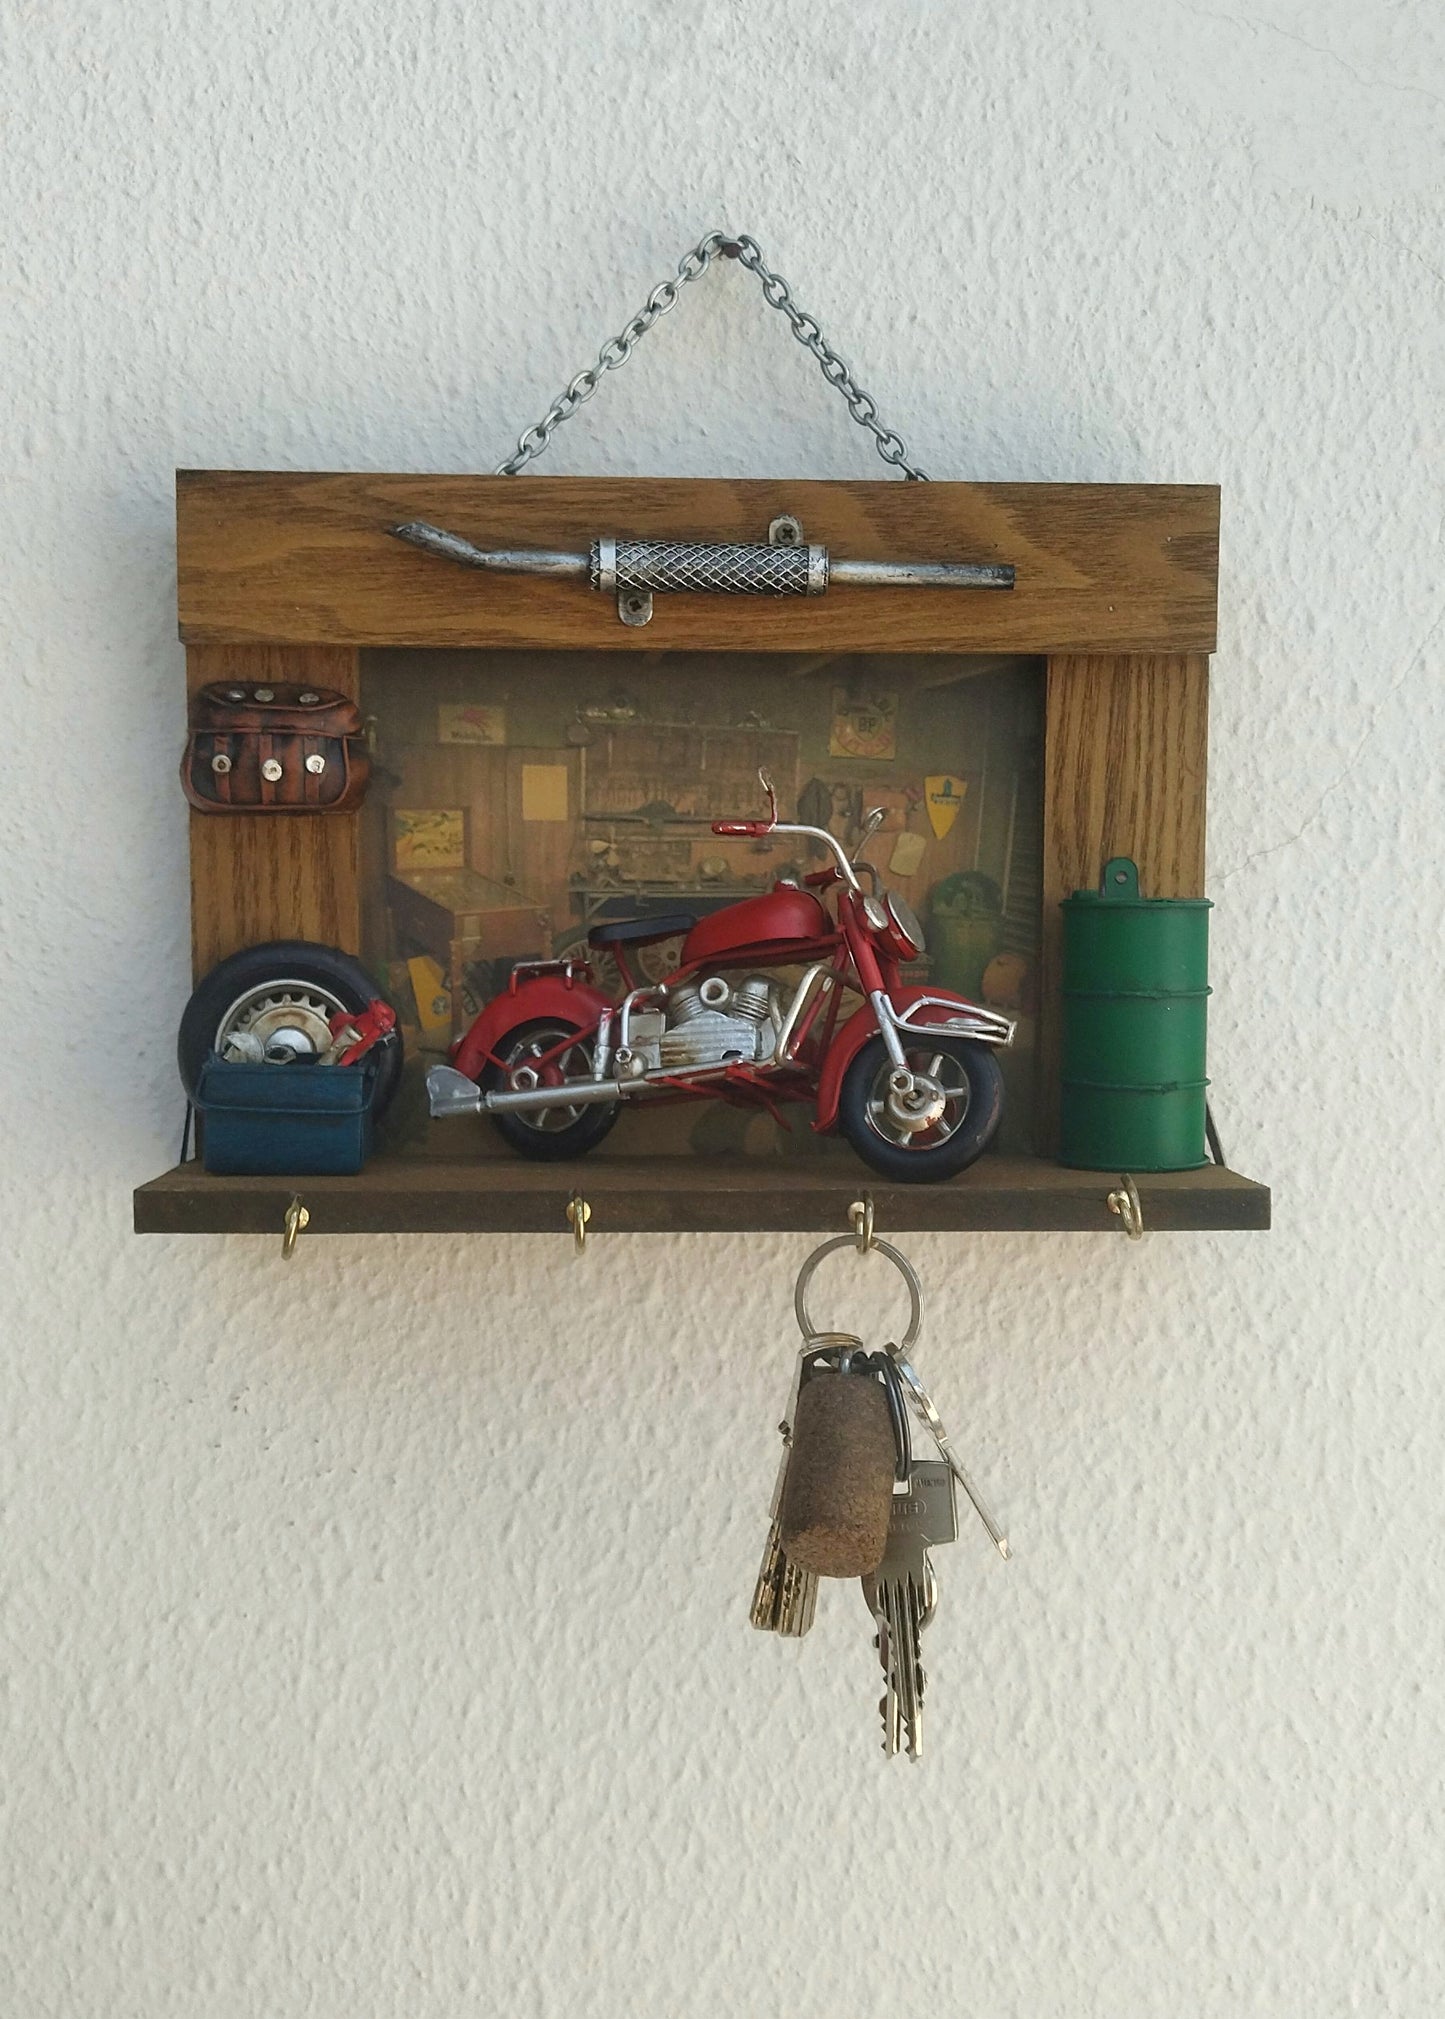 Motorcycle Garage Key Holder For Wall, Key Organizer With Retro Motorbike